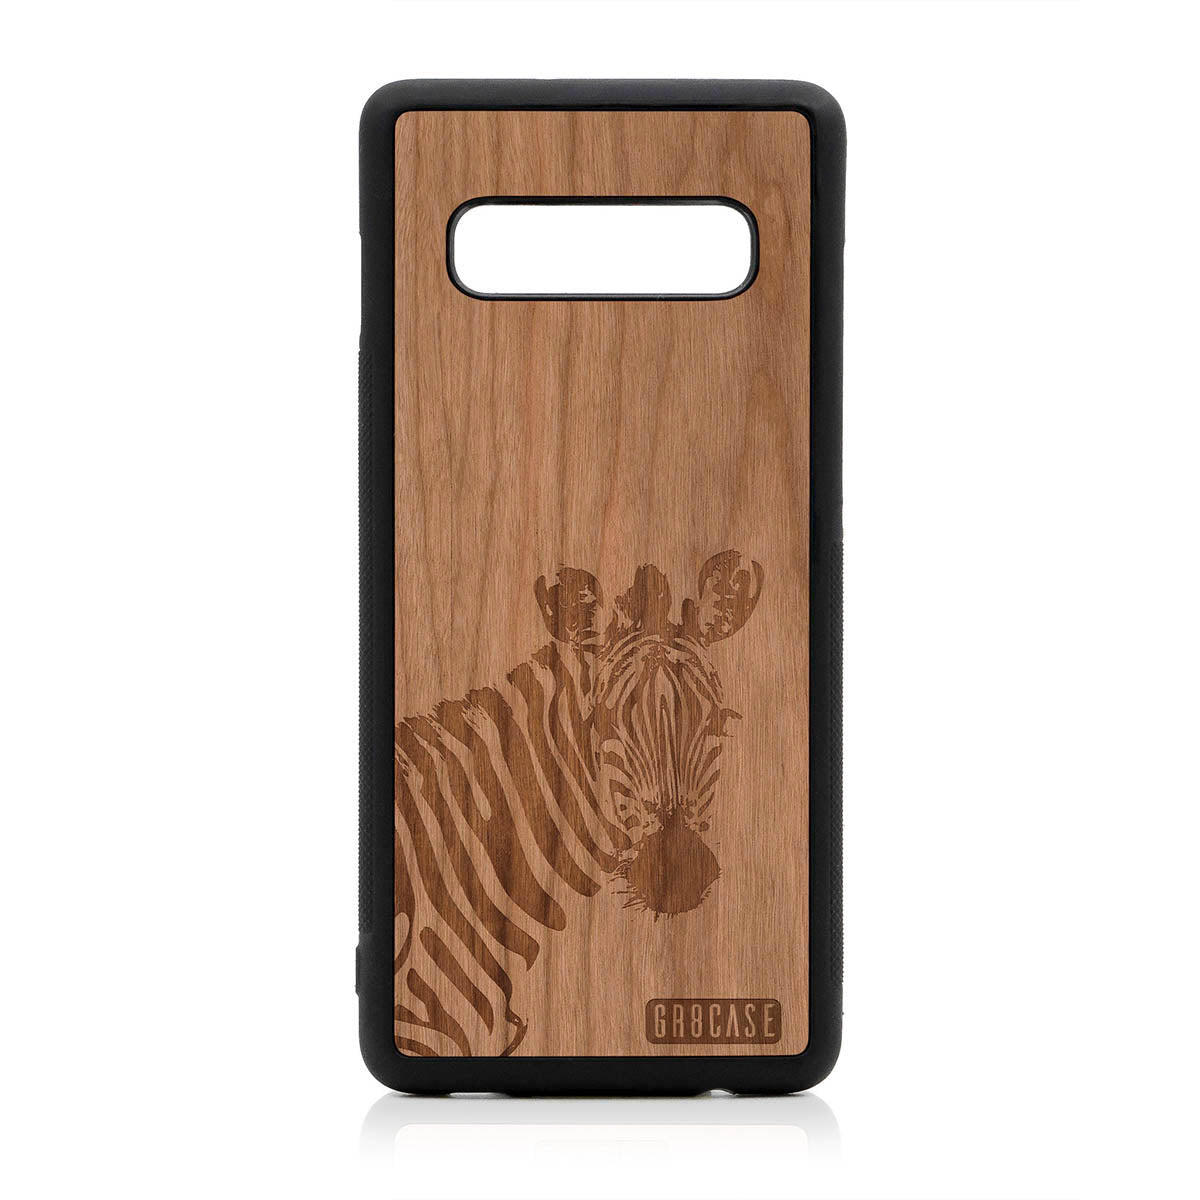 Lookout Zebra Design Wood Case For Samsung Galaxy S10 Plus